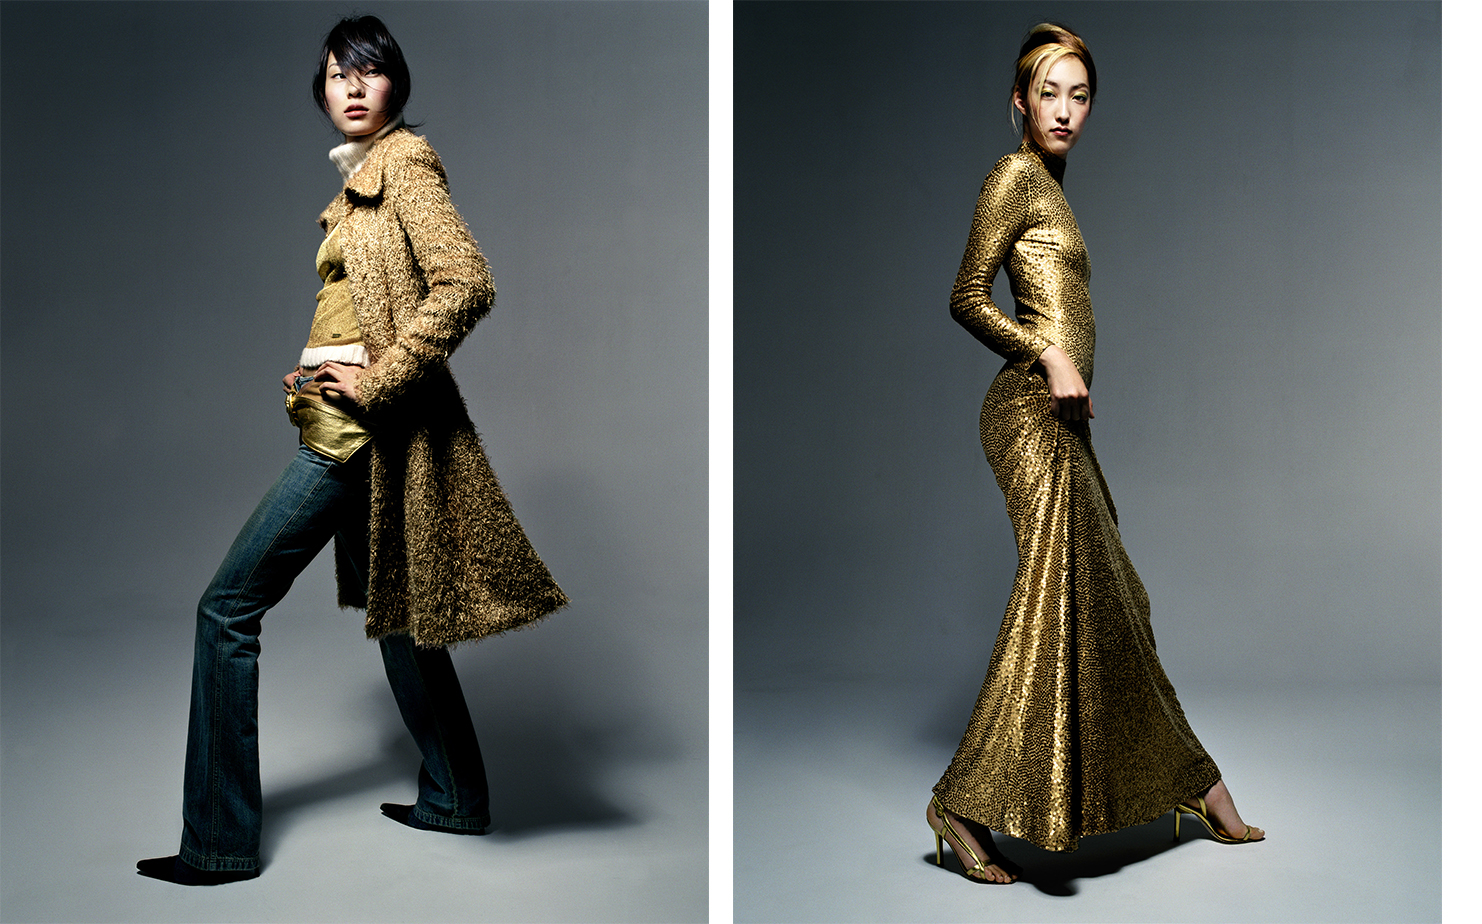   Vogue Japan DRESSING BY DECADE   FASHION EDITOR Tiina Laakkonen MAKE UP Lisa Eldridge 